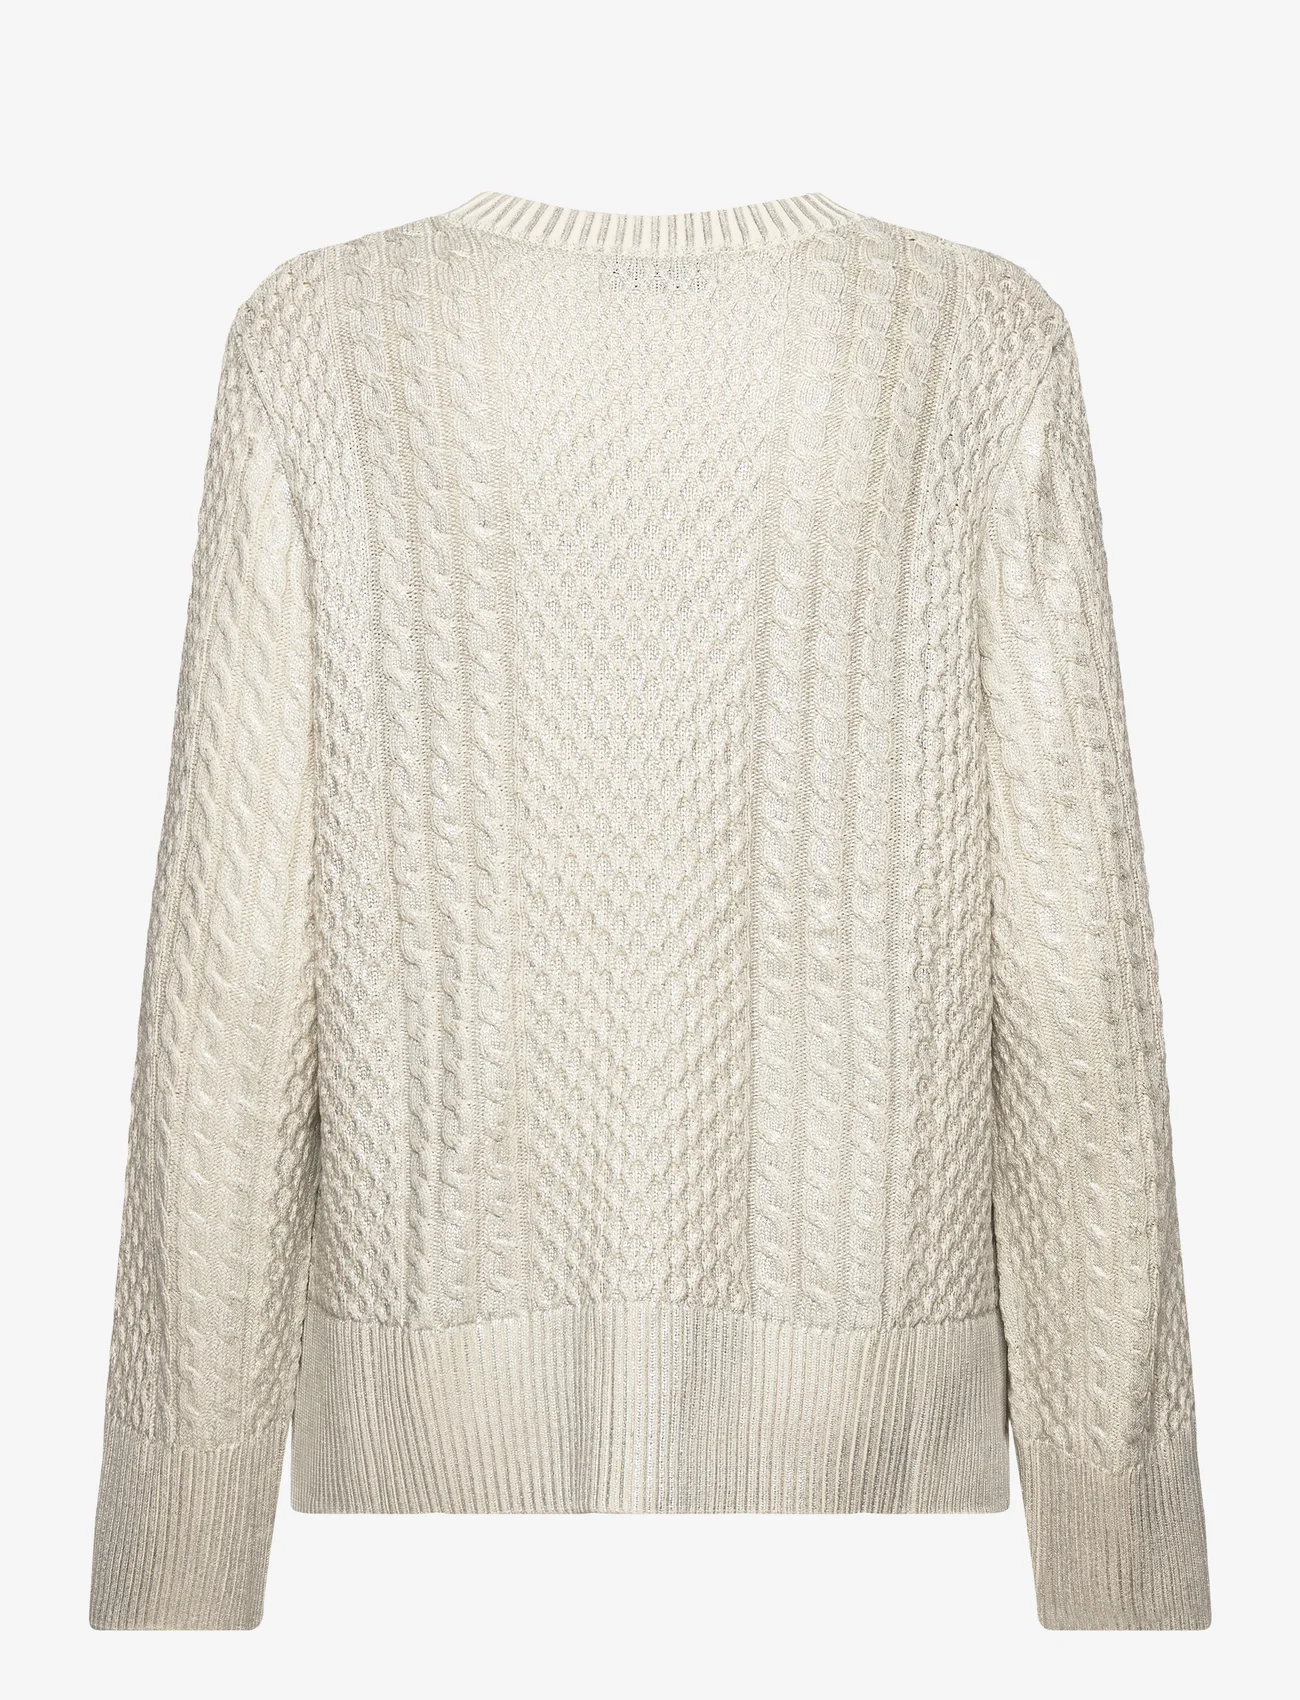 Malina - Lune cable knitted metallic sweater - džemperi - silver - 1